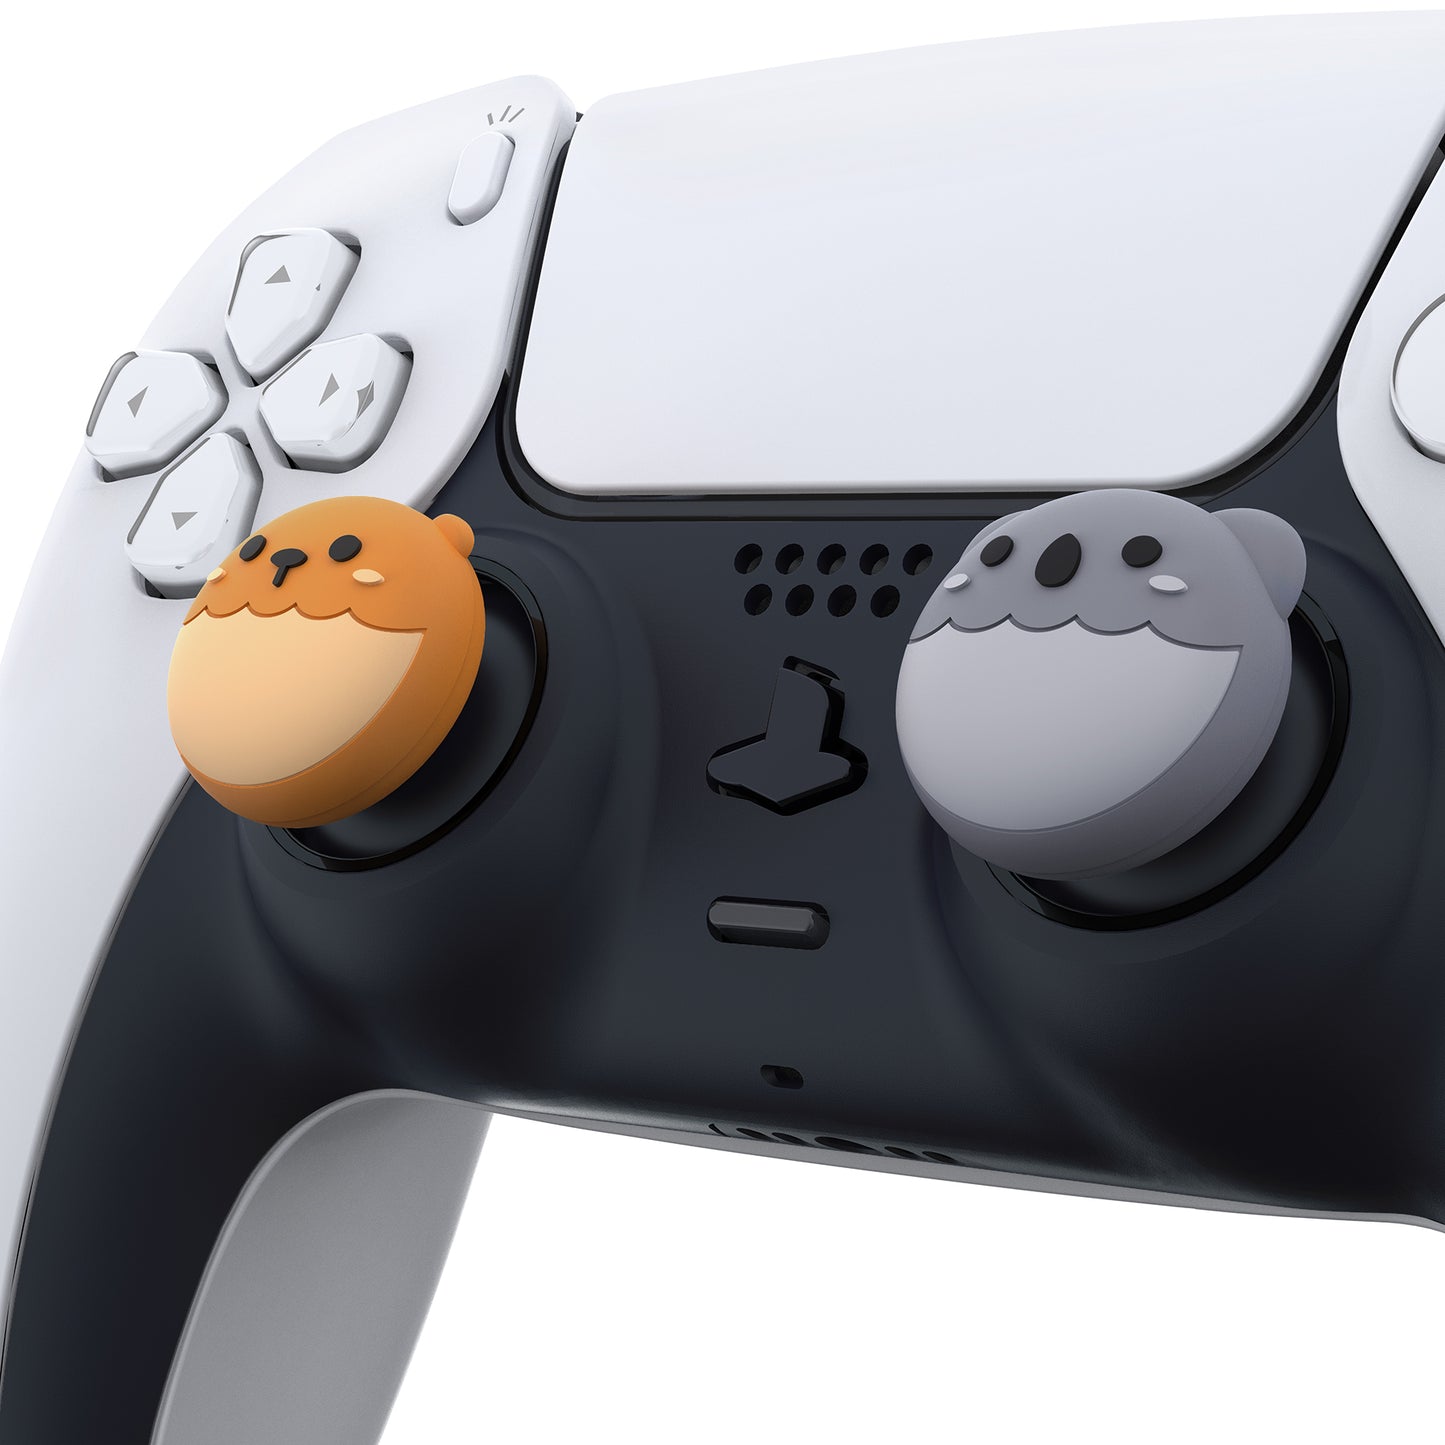 PlayVital Cute Thumb Grip Caps for ps5/4 Controller, Silicone Analog Stick Caps Cover for Xbox Series X/S, Thumbstick Caps for Switch Pro Controller - Brown Bear & Koala - PJM3001 PlayVital